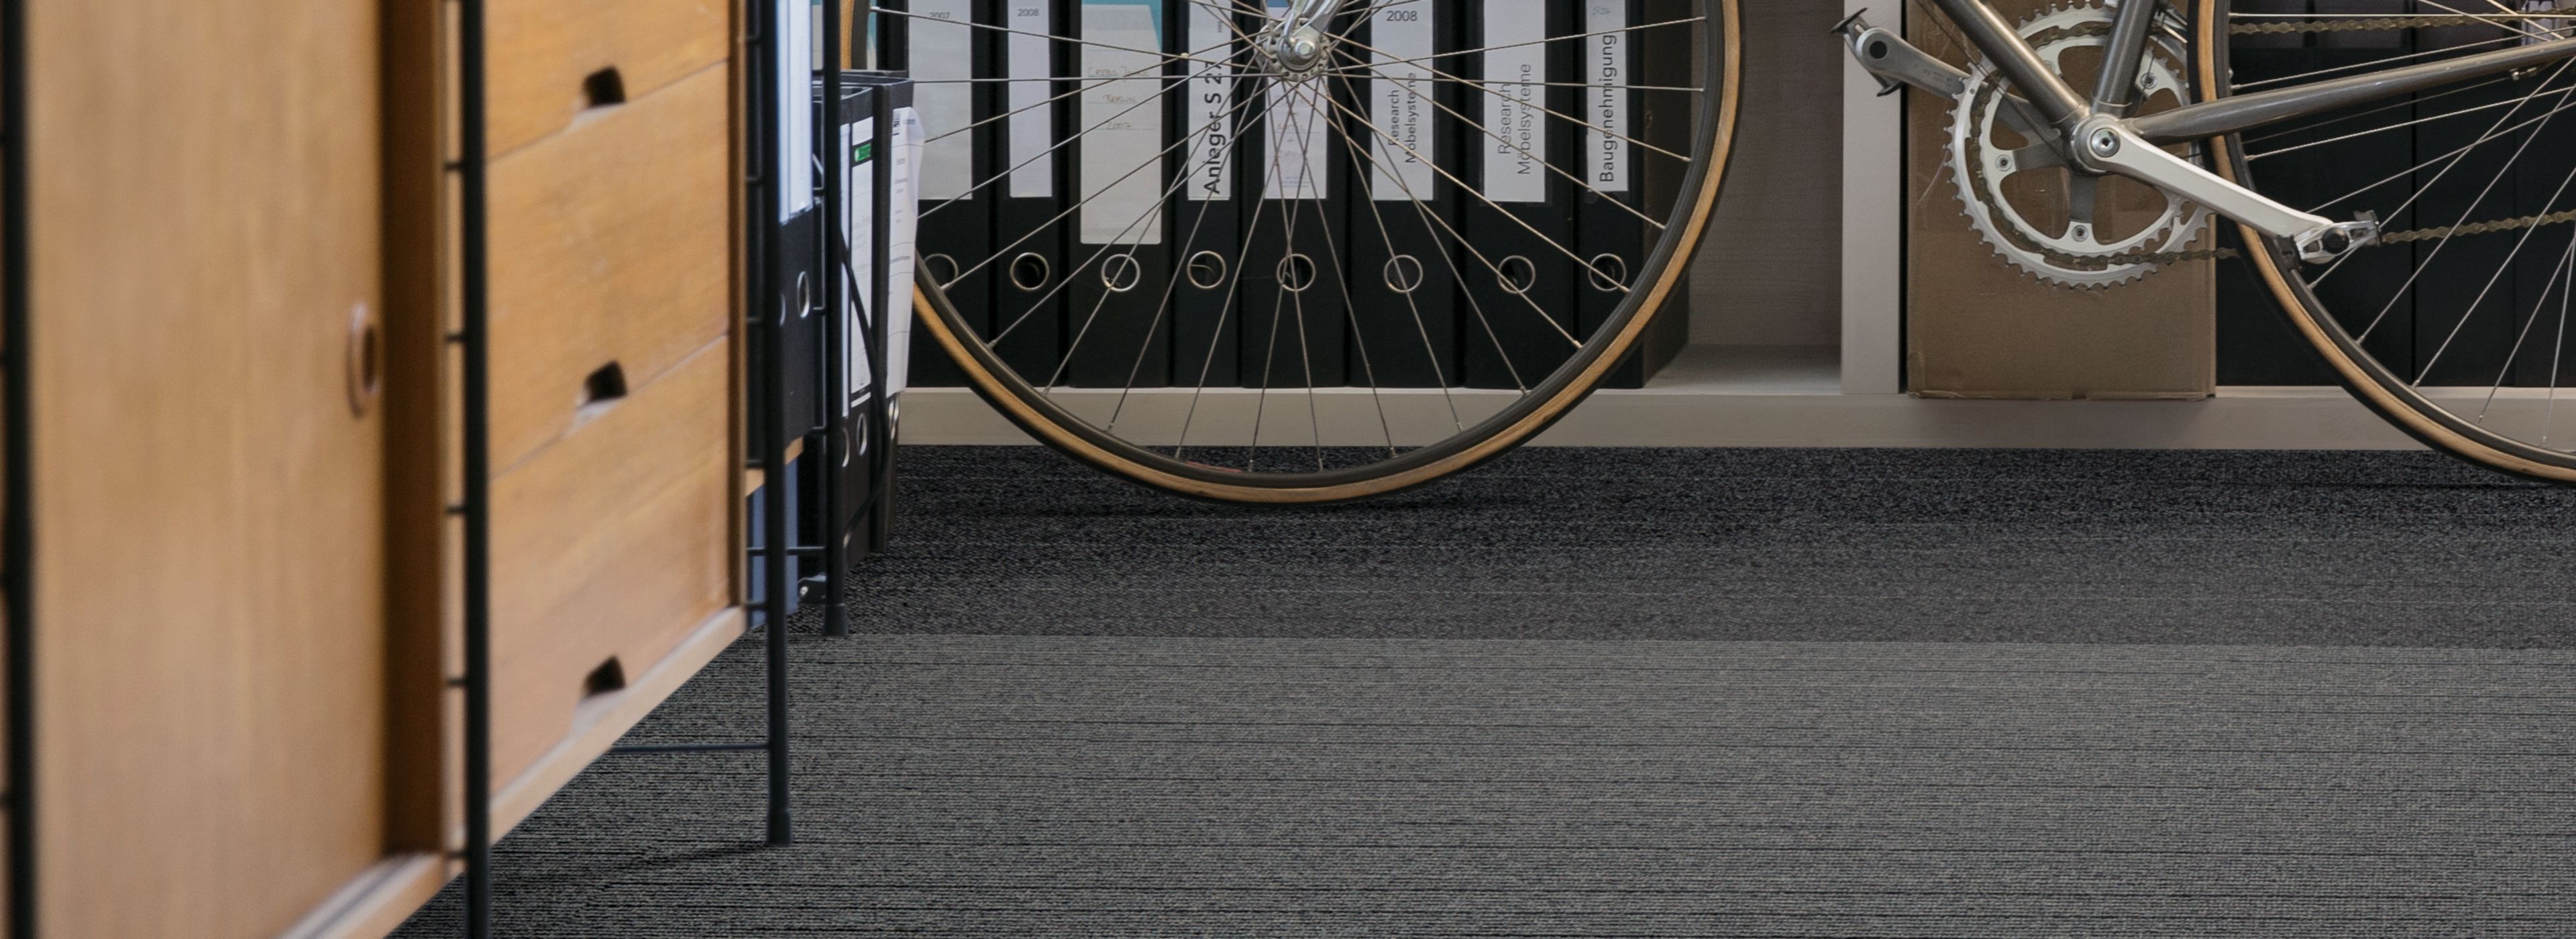 Interface YesterWeave plank carpet tile in office area with bike imagen número 1